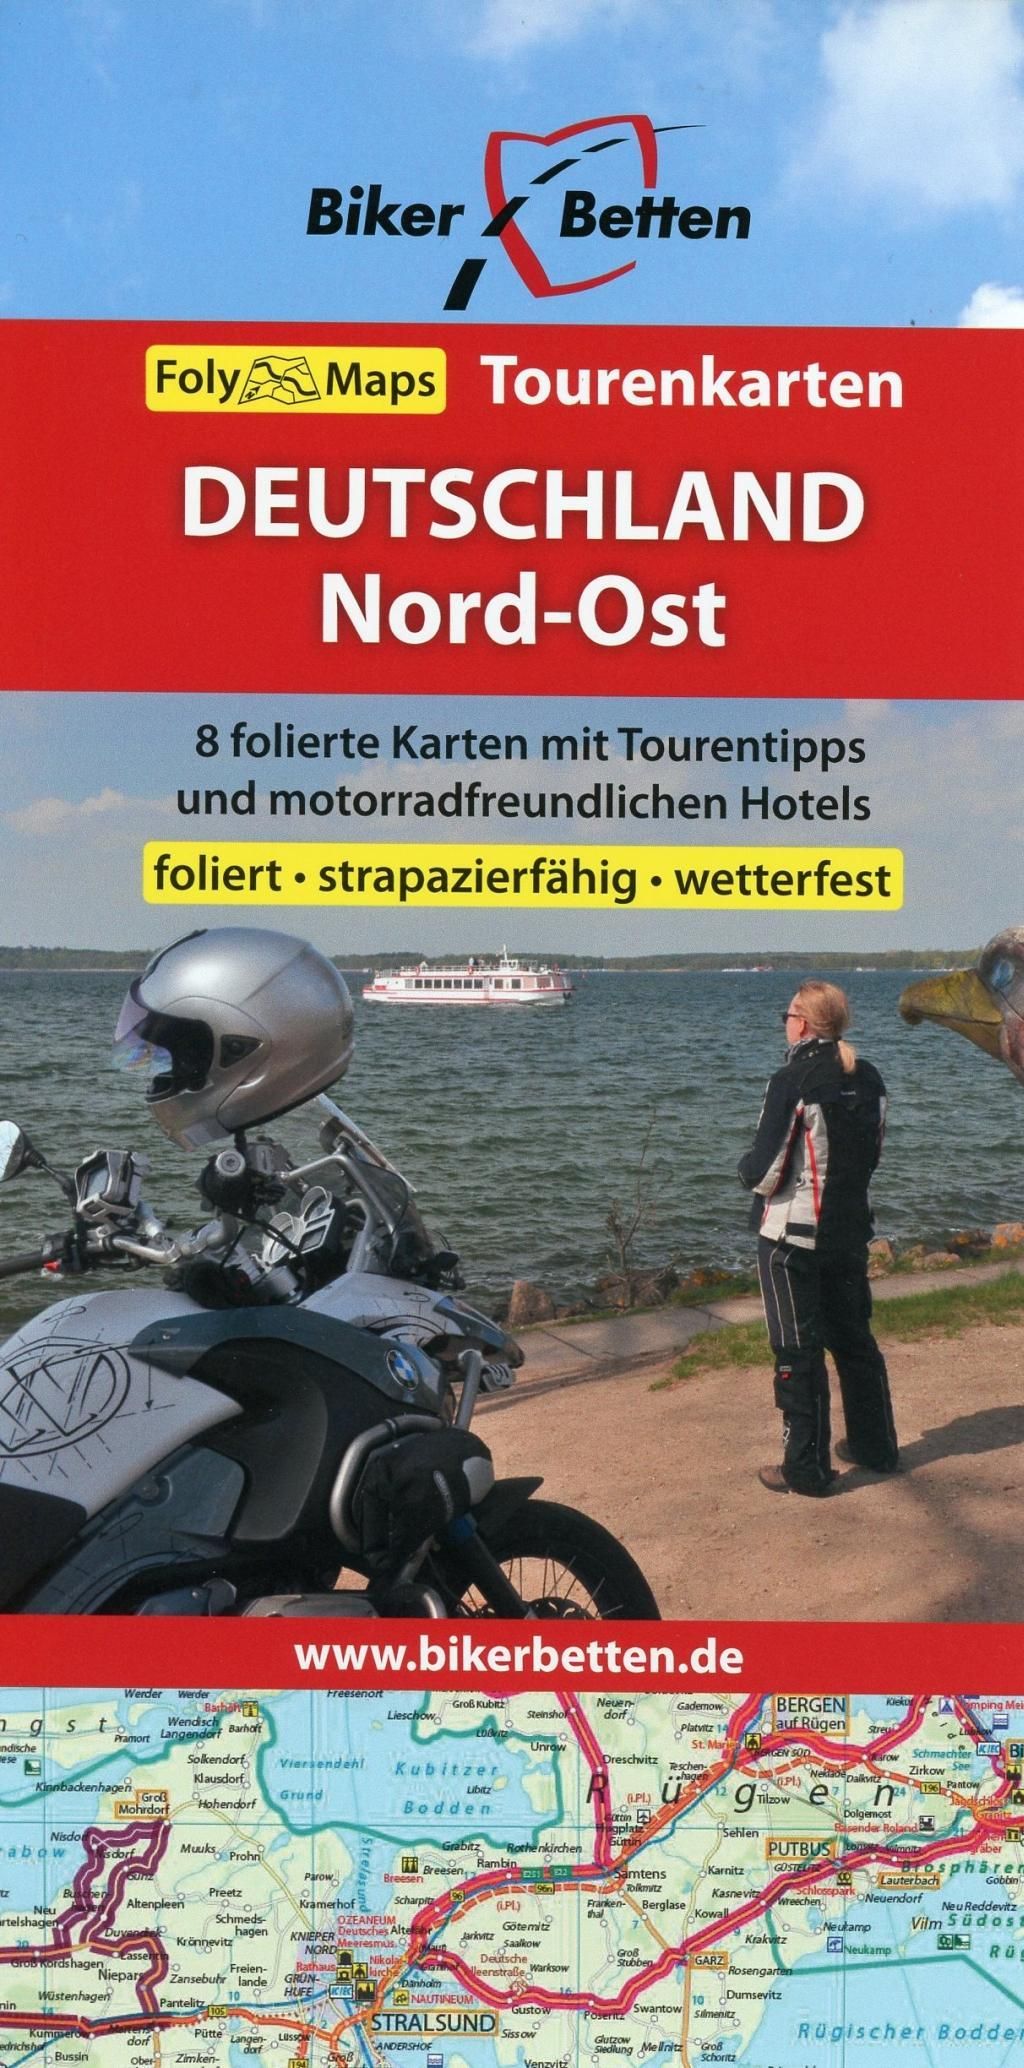 folymaps-tourenkarten-set-deutschland-nord-ost-karte.jpeg